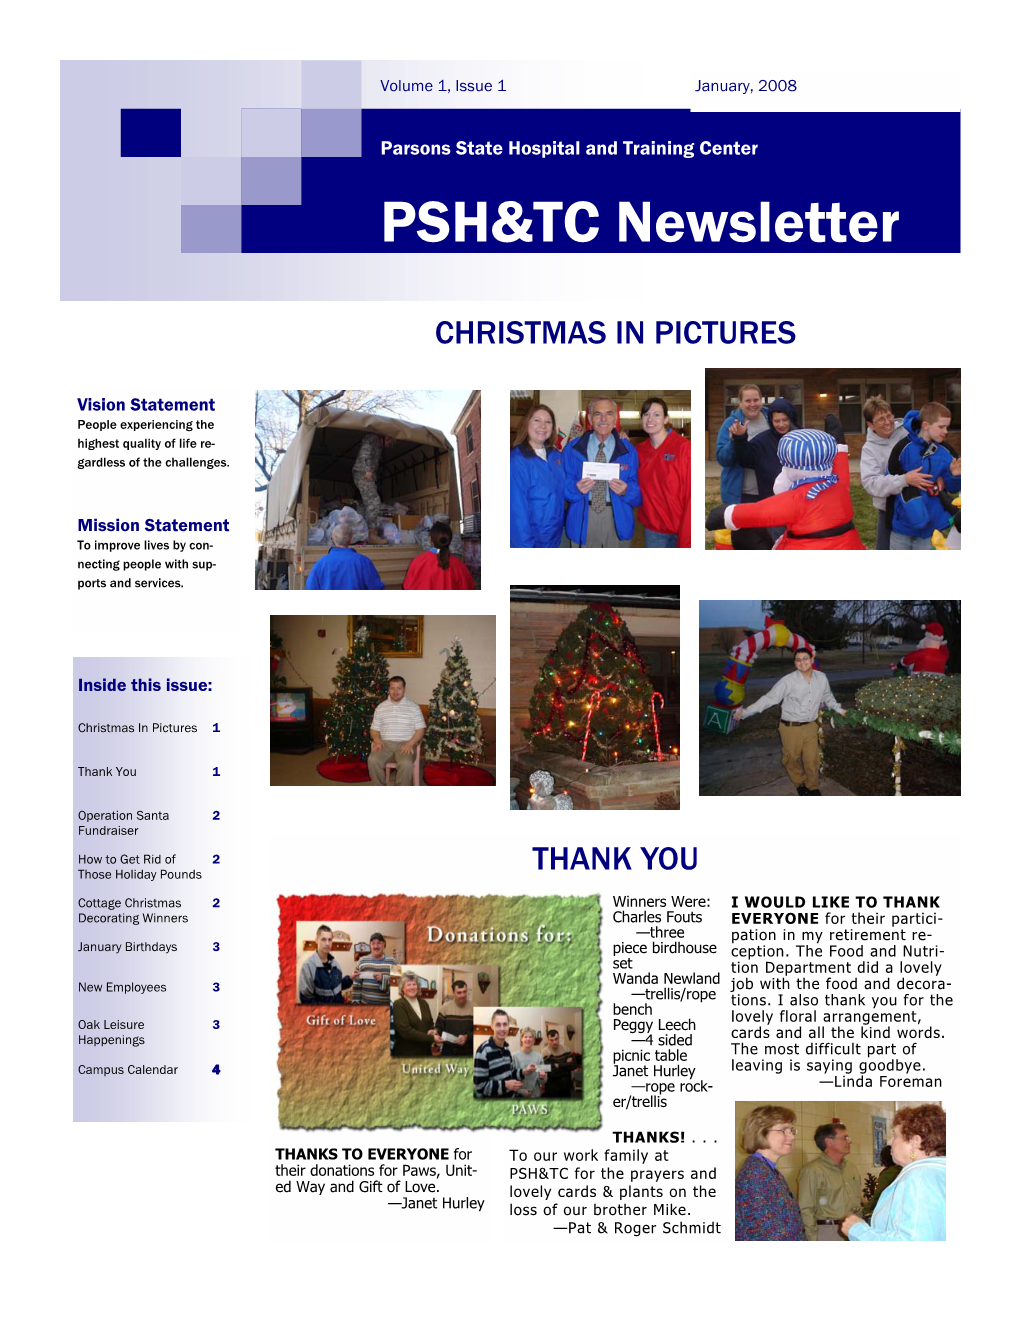 PSH&TC Newsletter